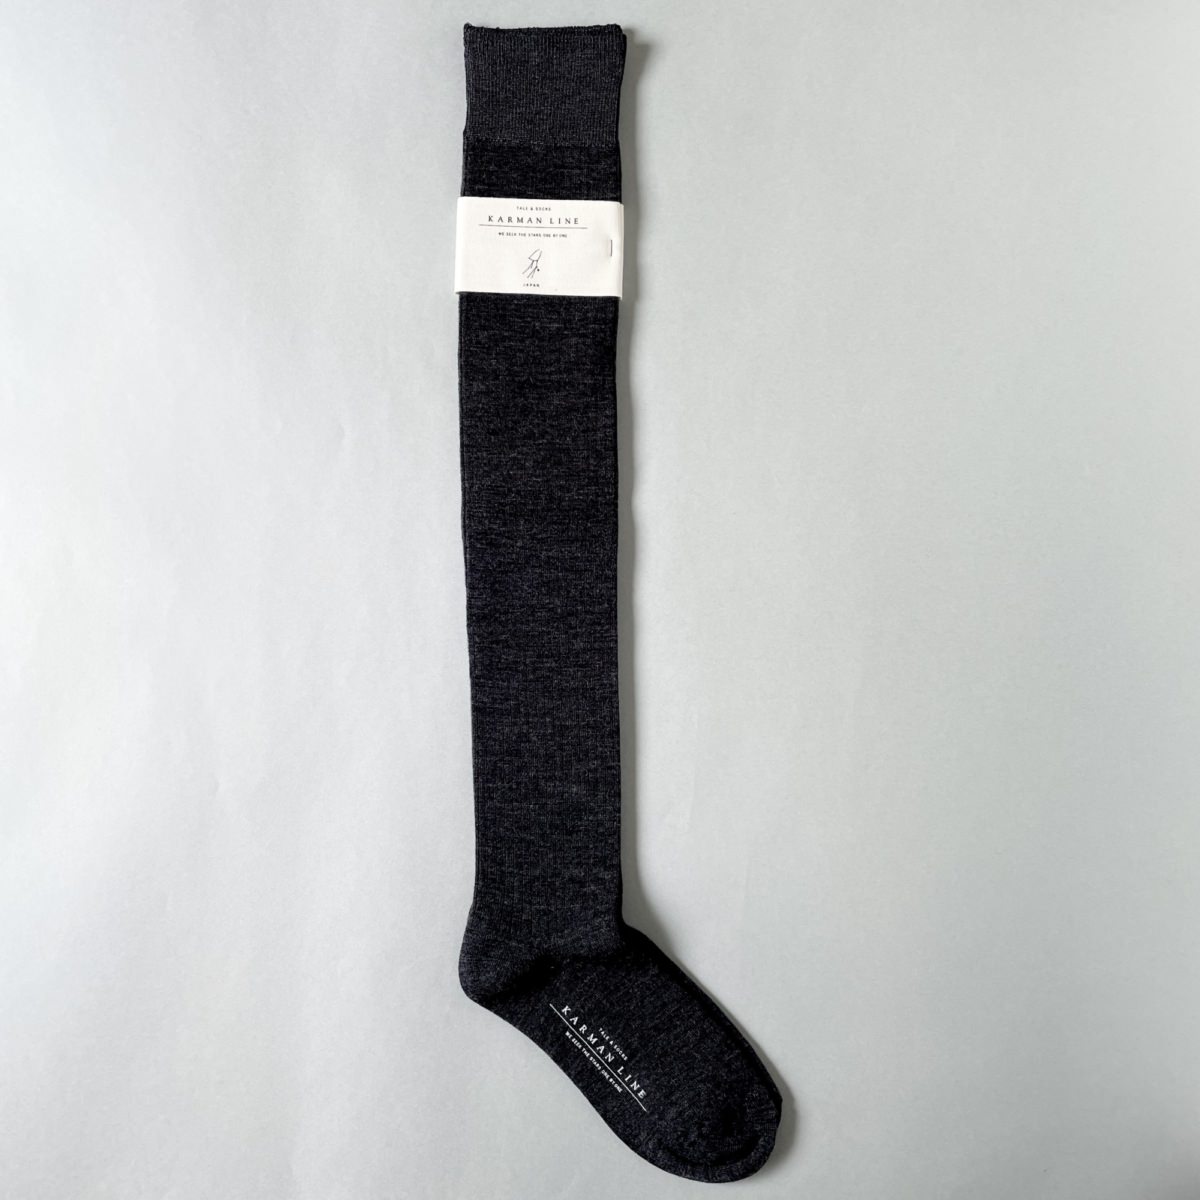 KARMAN LINE VIRGO / Knee high socks / Charcoal